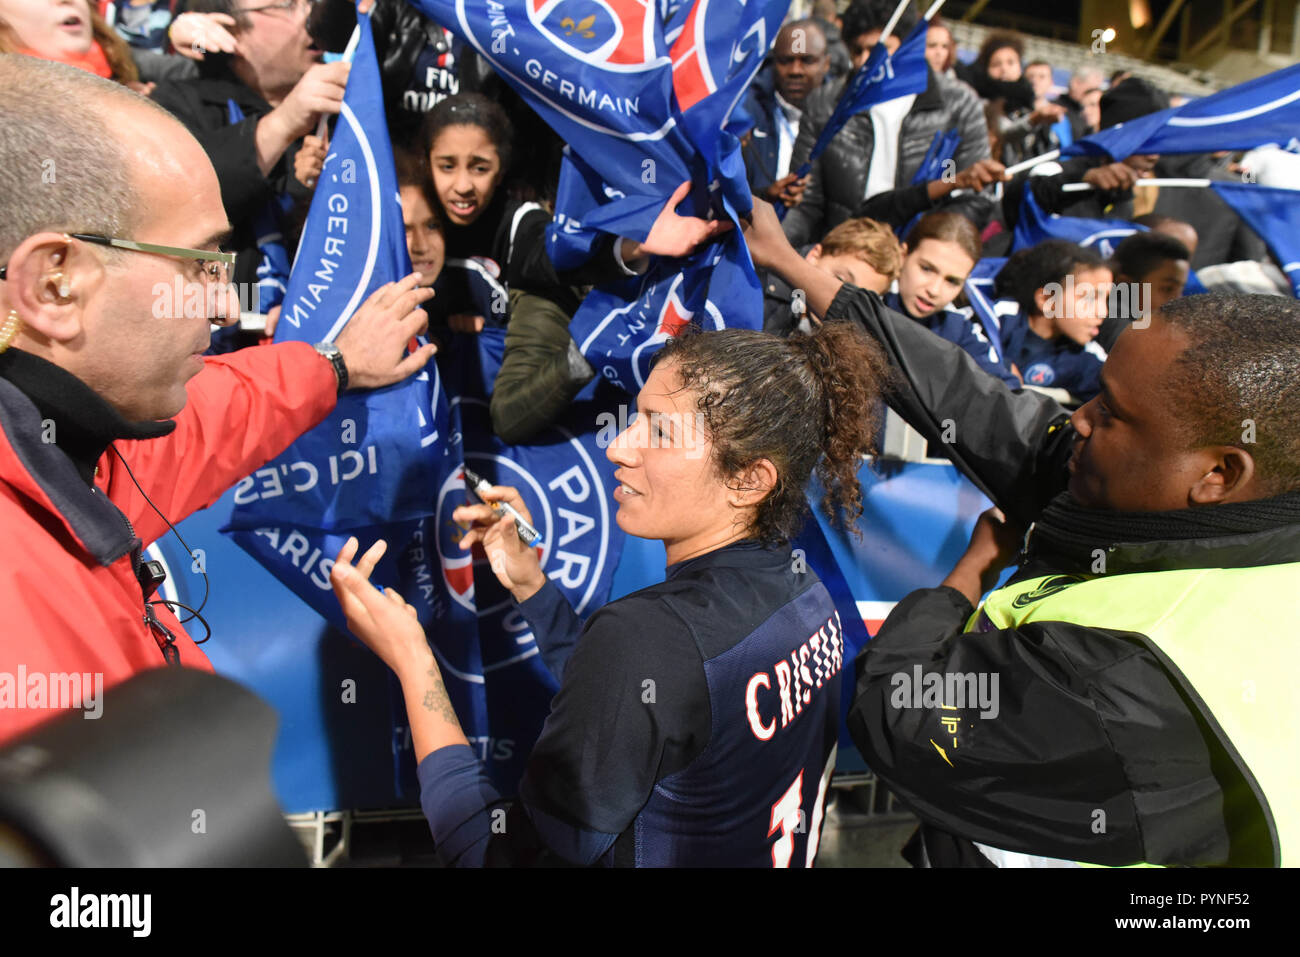 November 18, 2015 - Paris, France: Paris PSG player Cristiane Rozeira de  Souza Silva signs autographs and salute supporters after the football match  between Orebro and PSG. Match de foot entre l'equipe